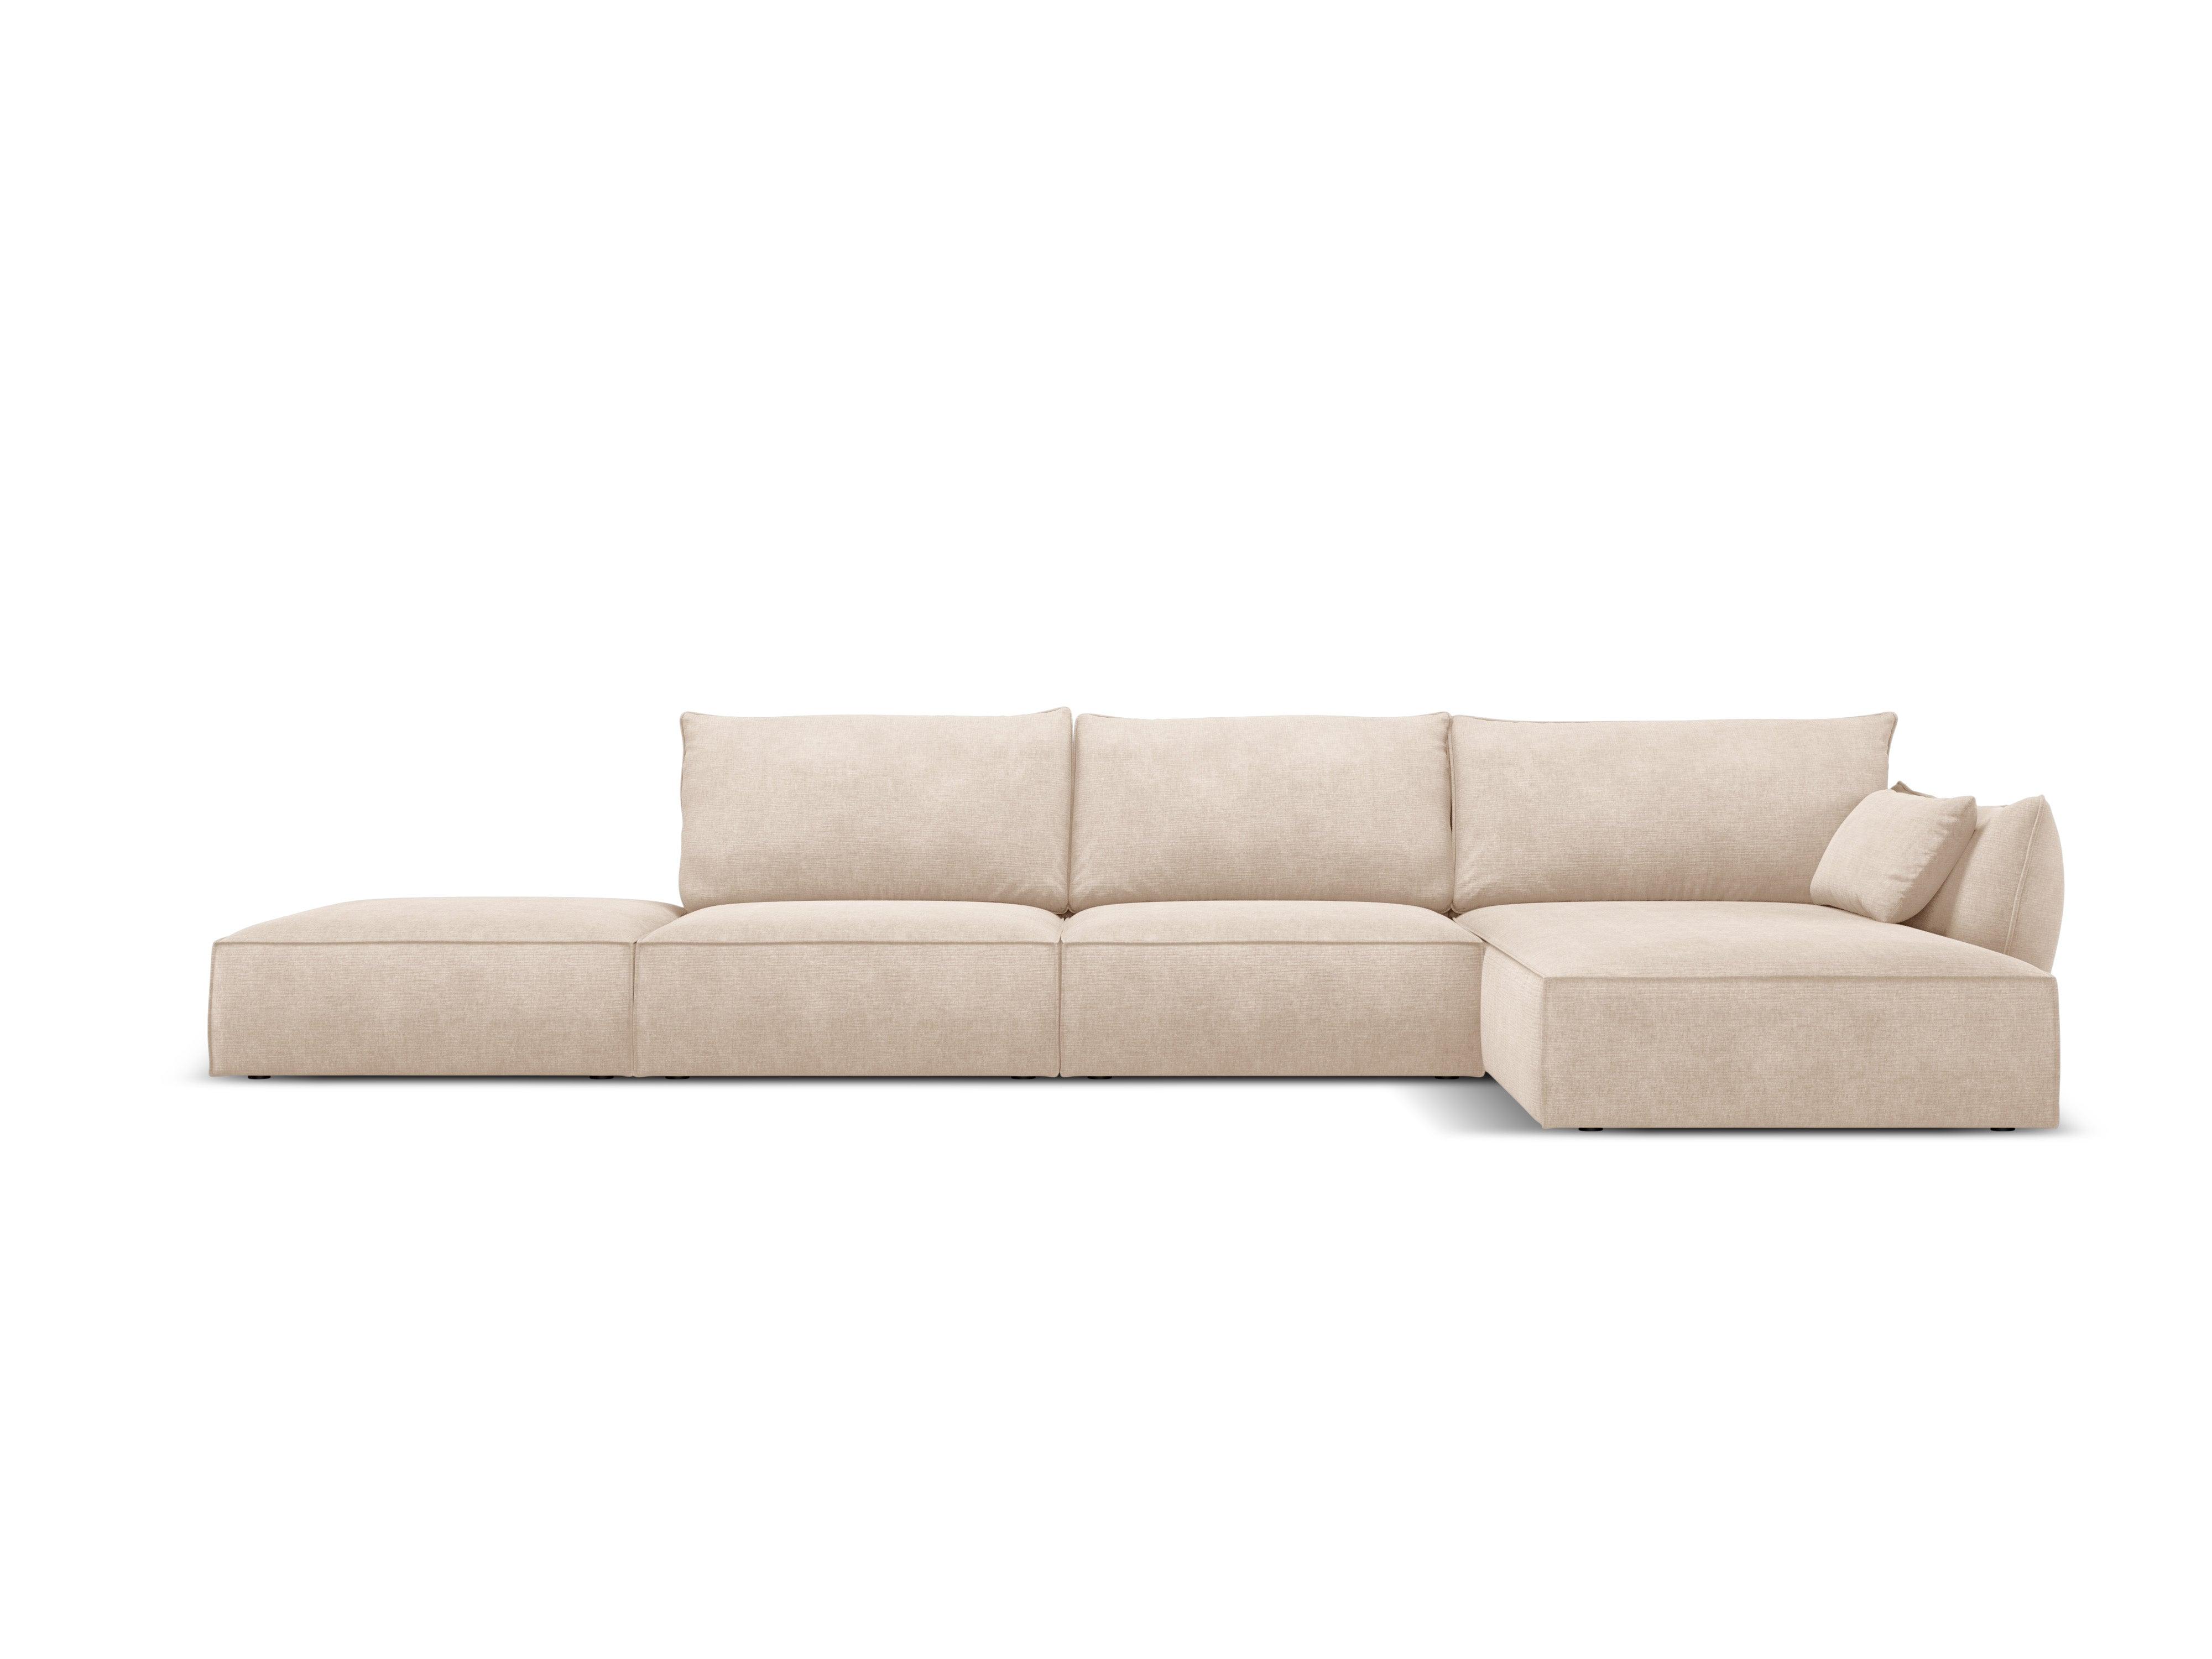 Right Corner Sofa, "Vanda", 5 Seats, 386x166x85
Made in Europe, Mazzini Sofas, Eye on Design